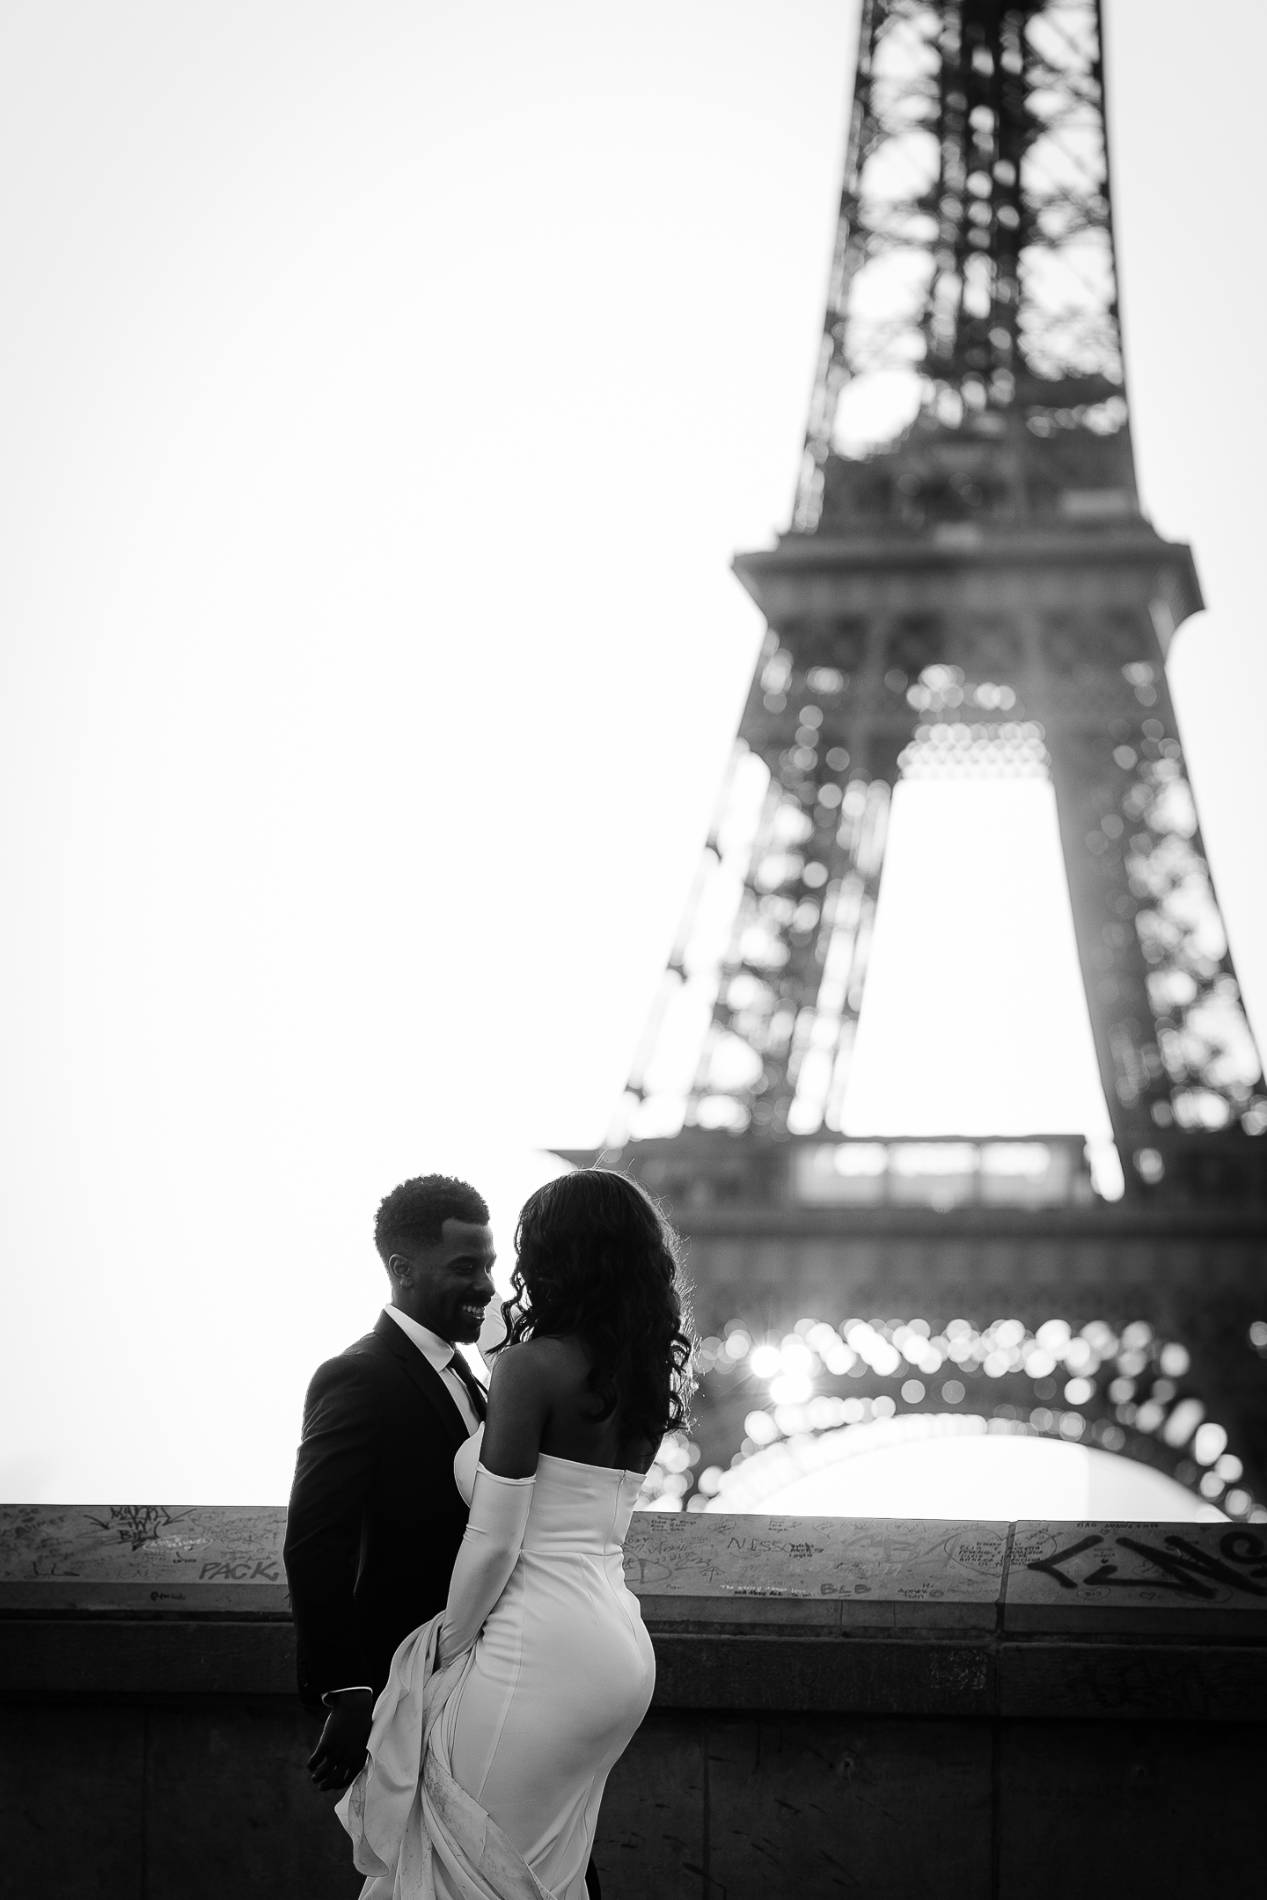 amelie labarthe photography - photographe couple paris - shooting lifestyle